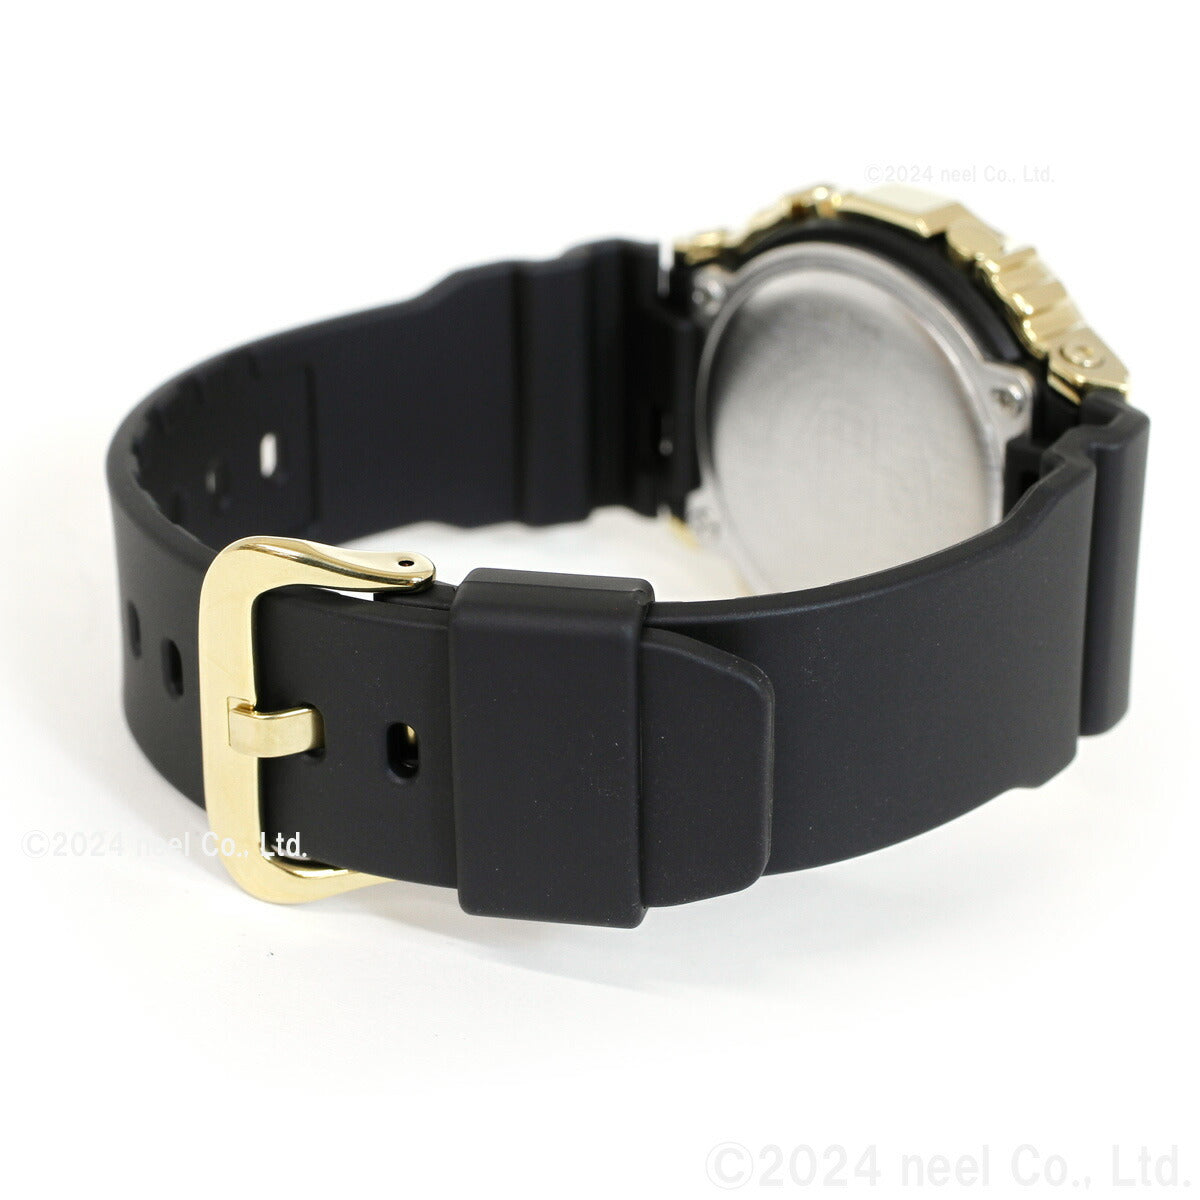 G-SHOCK デジタル カシオ Gショック CASIO 腕時計 メンズ GM-5600UG-9JF ブラック ゴールド メタルカバー LEDバックライト